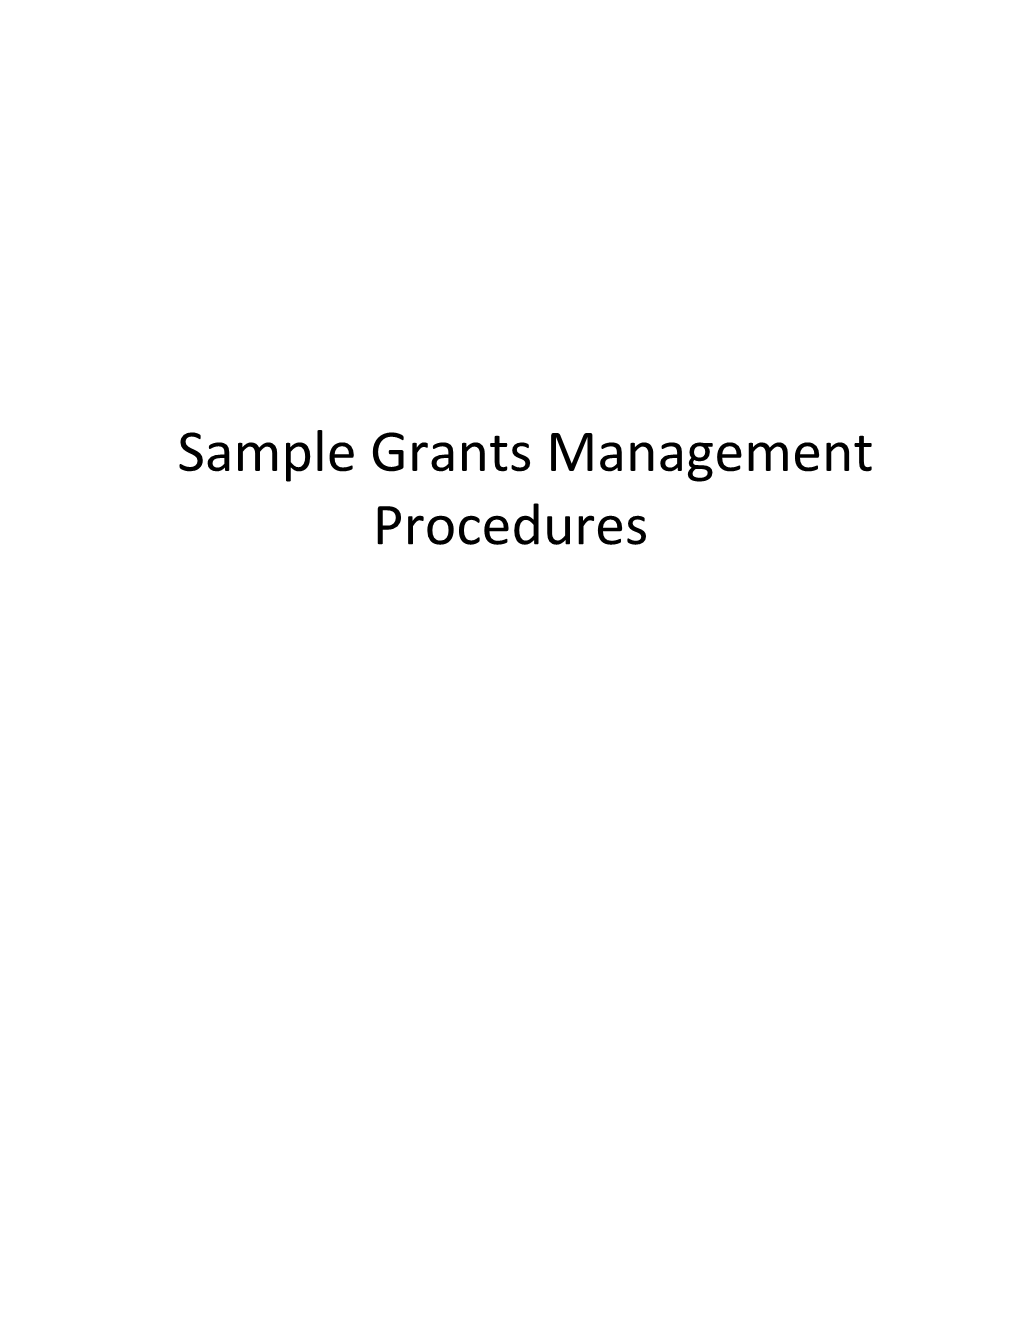 Sample Grants Management Procedures